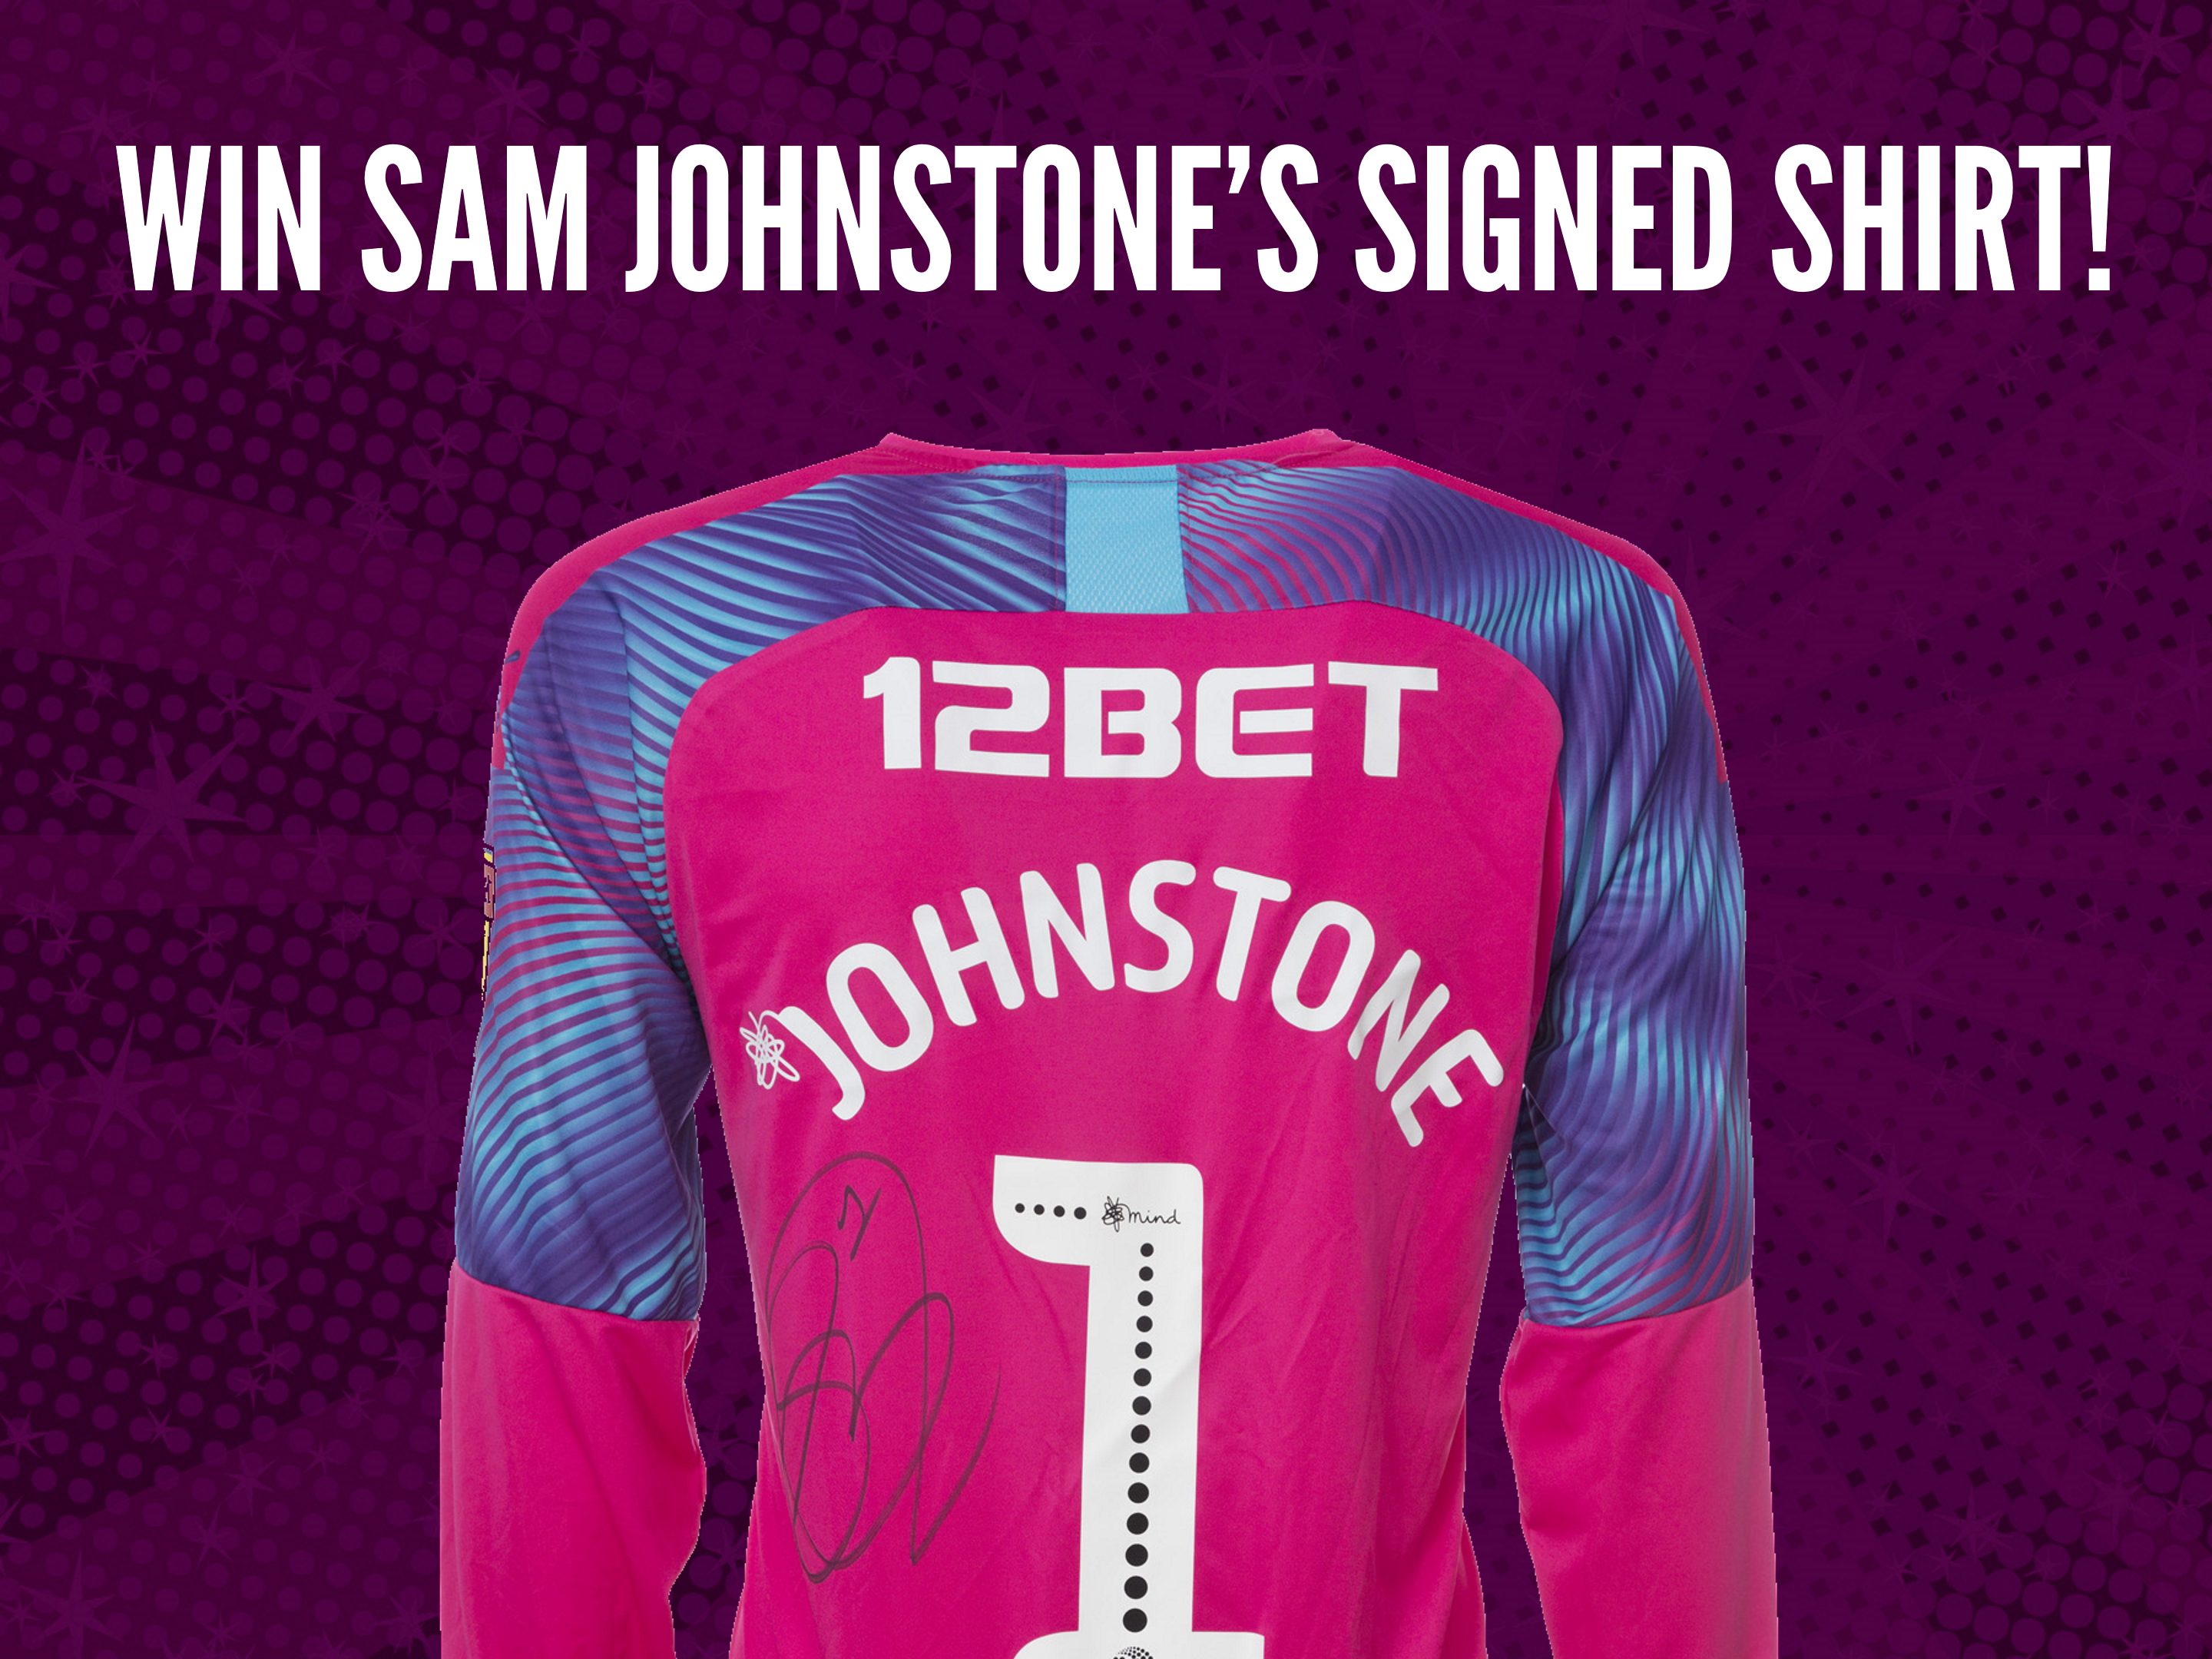 Win Sam Johnstone's signed shirt!